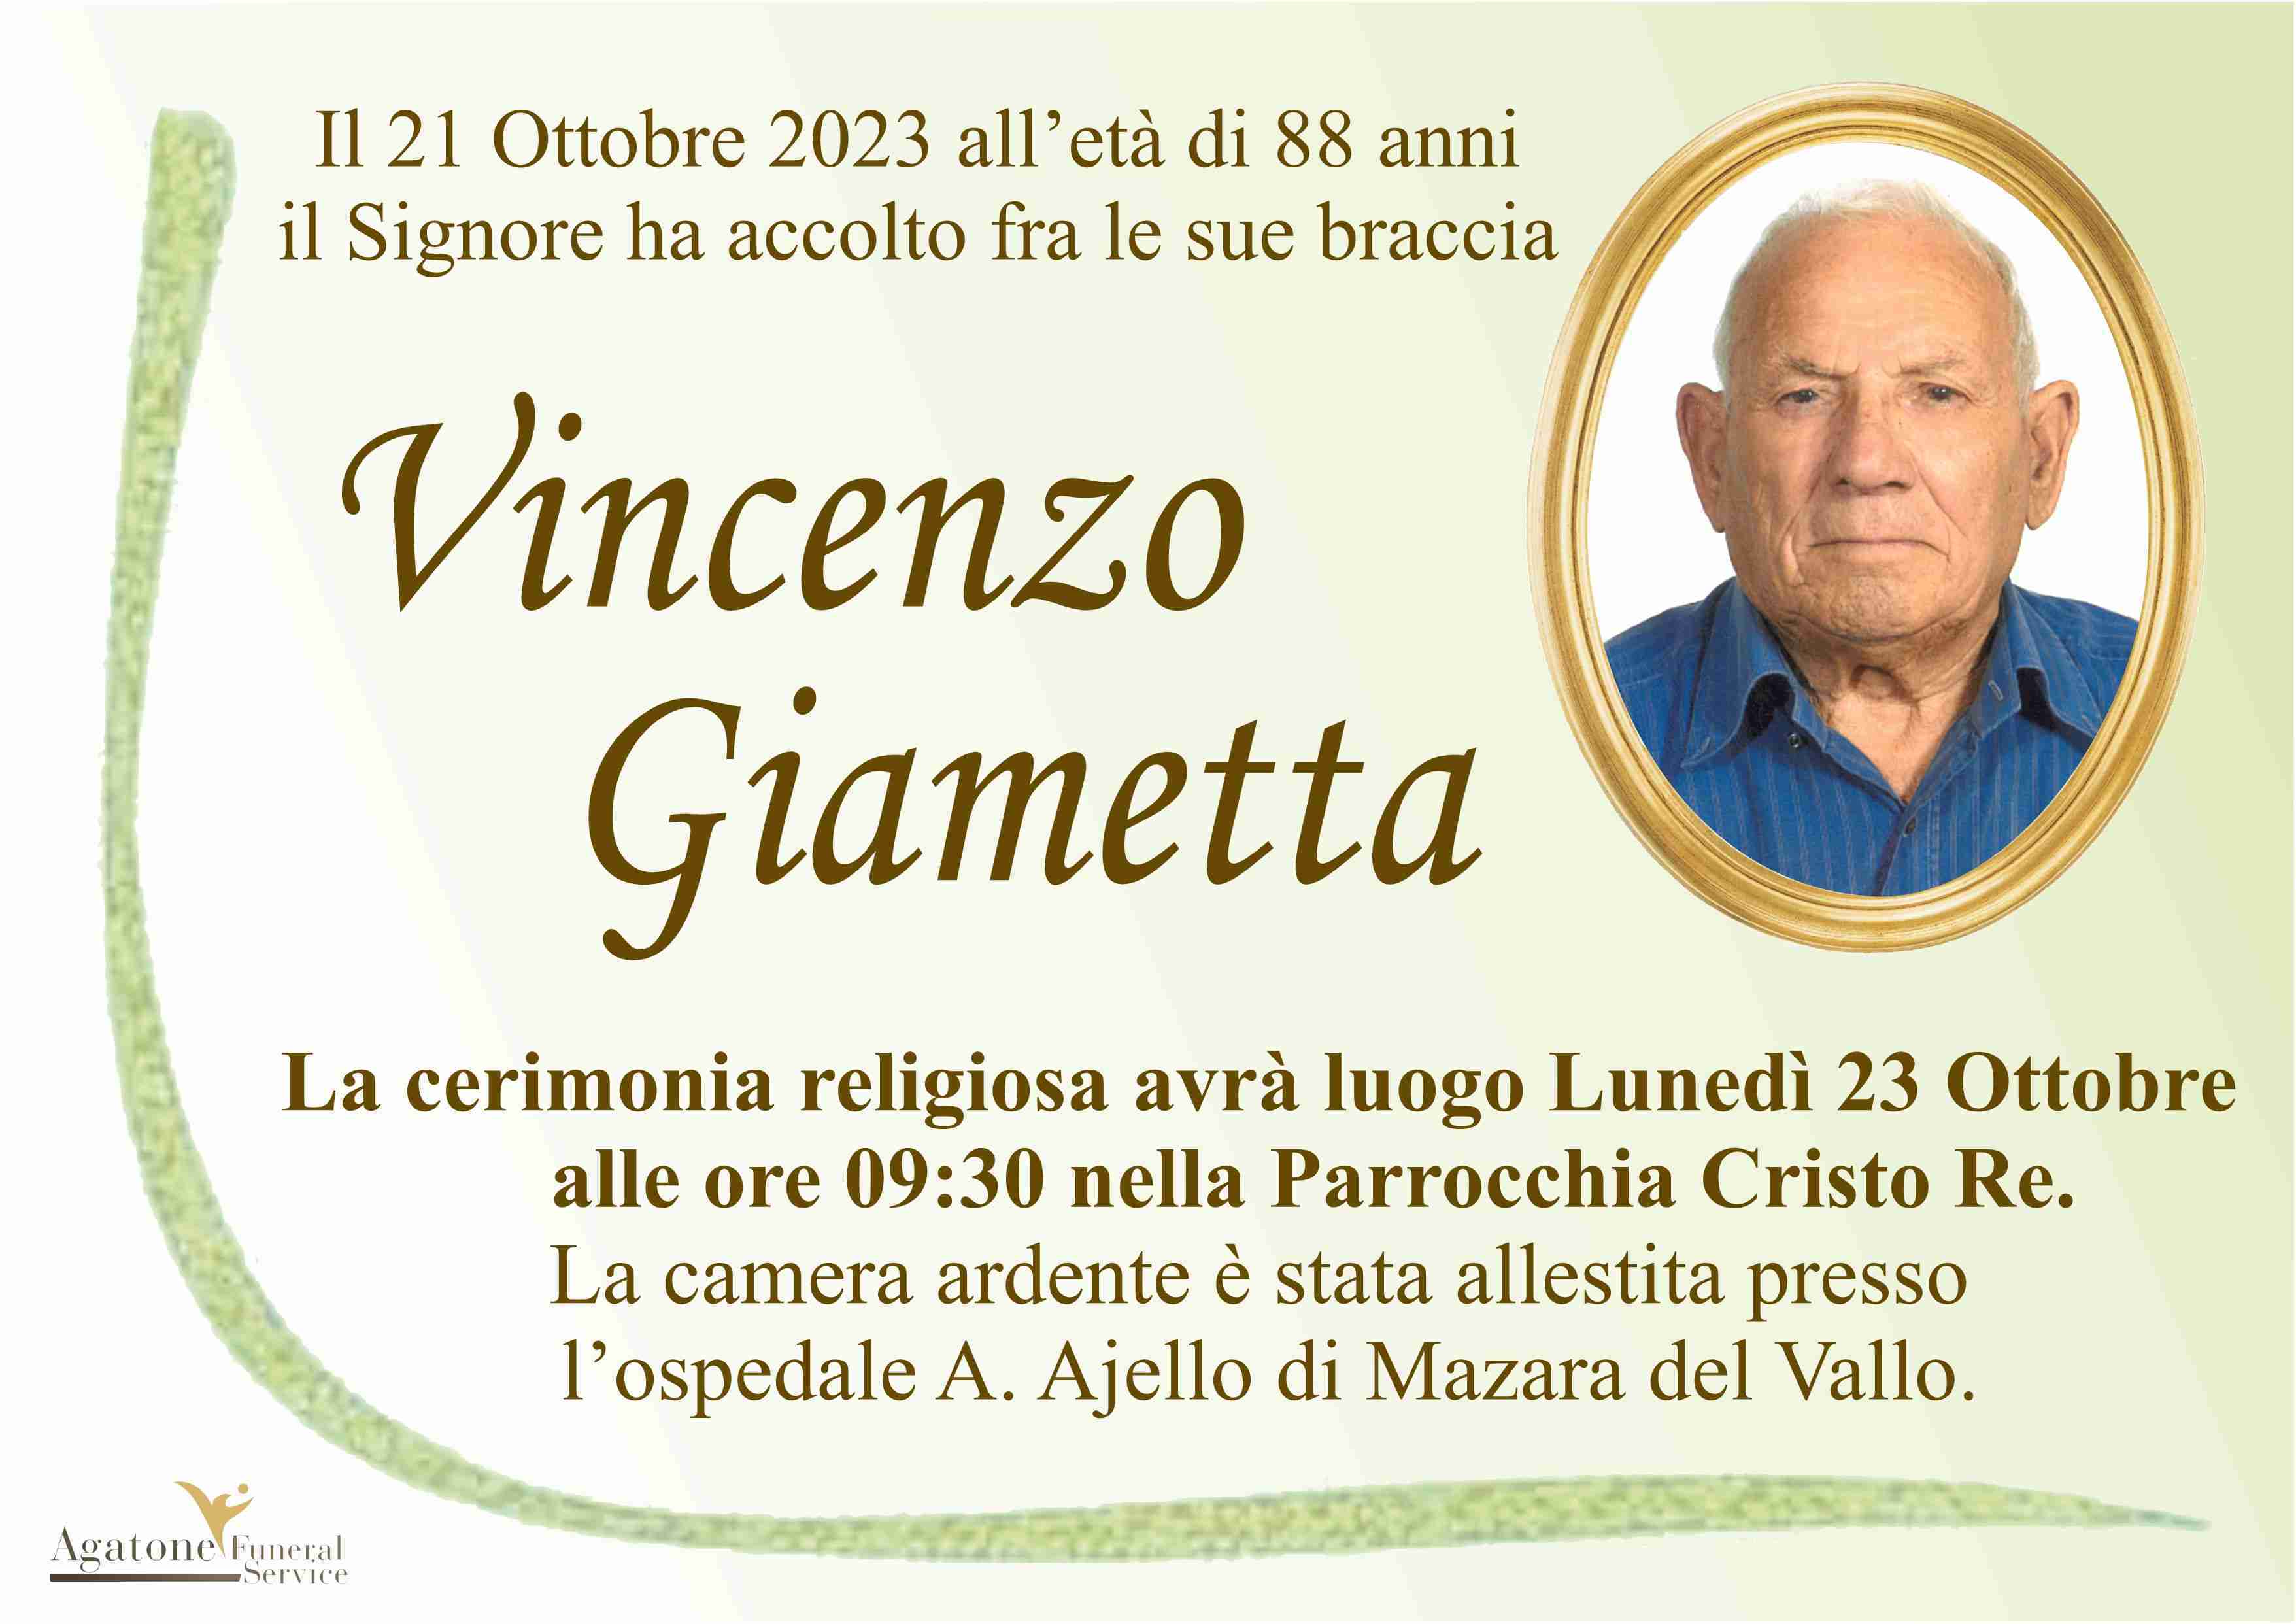 Vincenzo Giametta